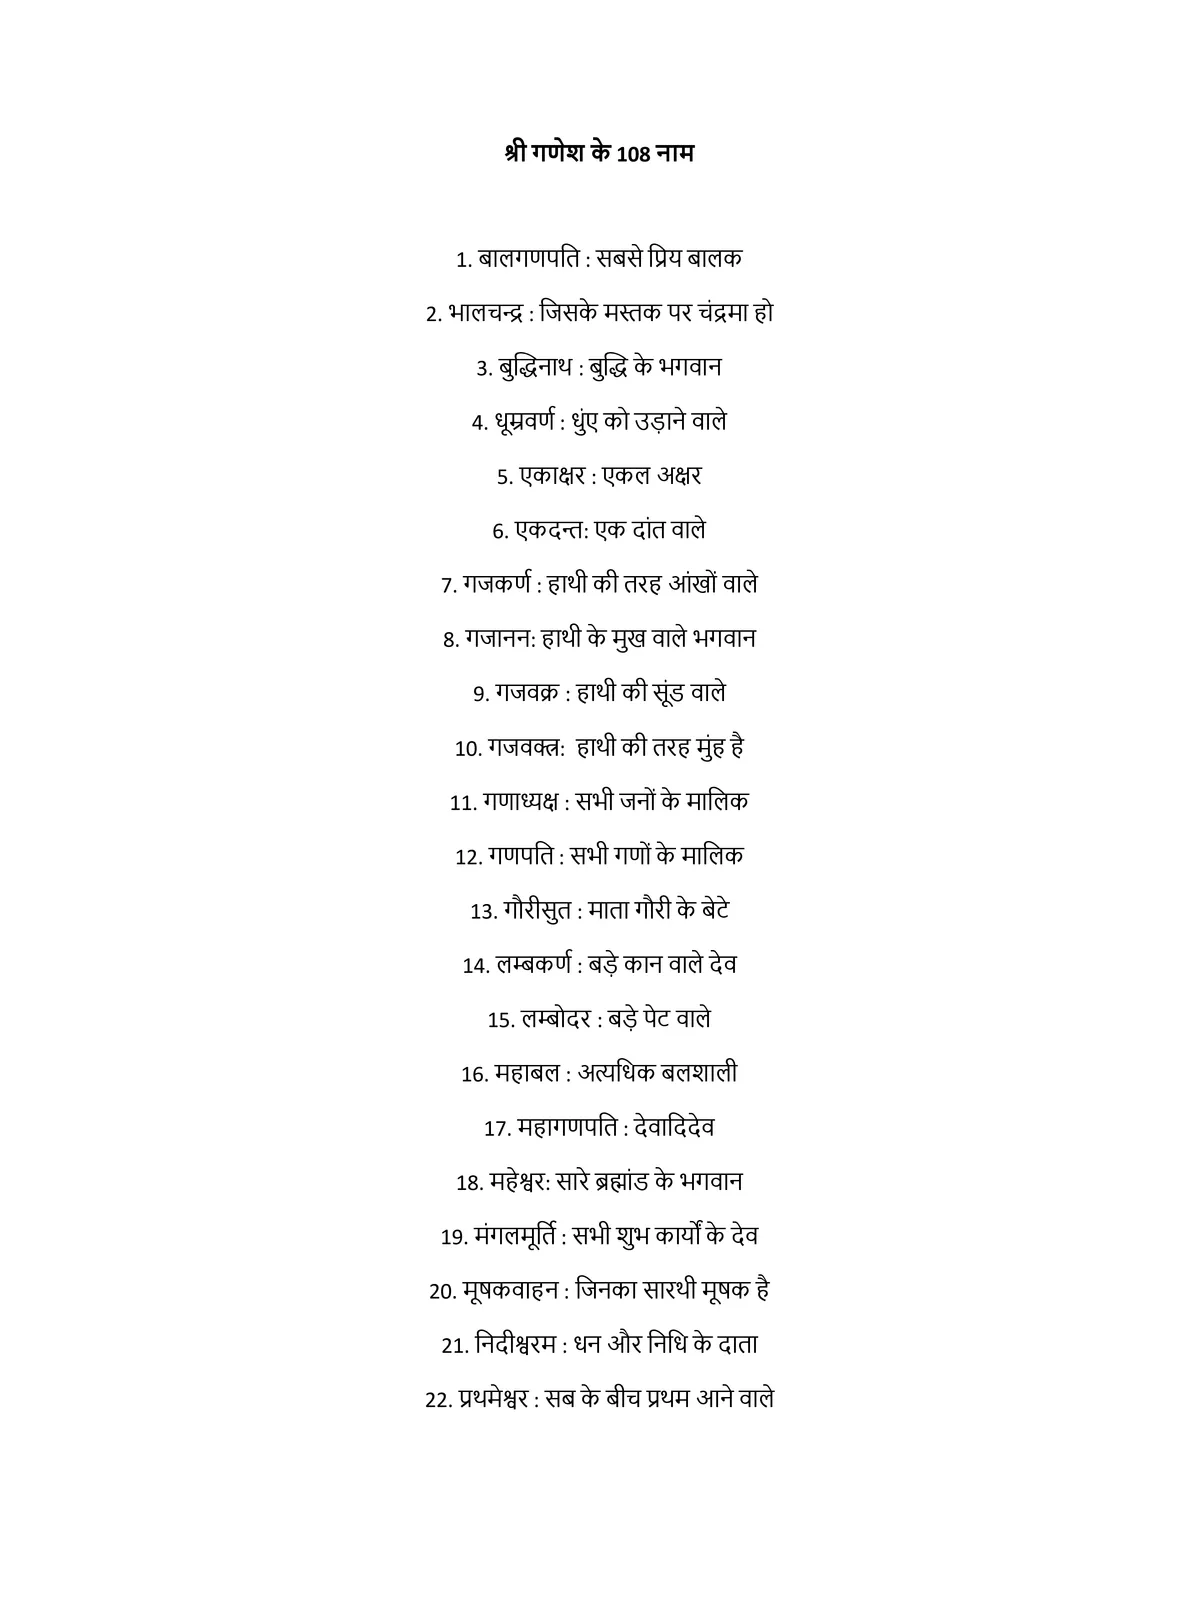 108 Names of Ganesha